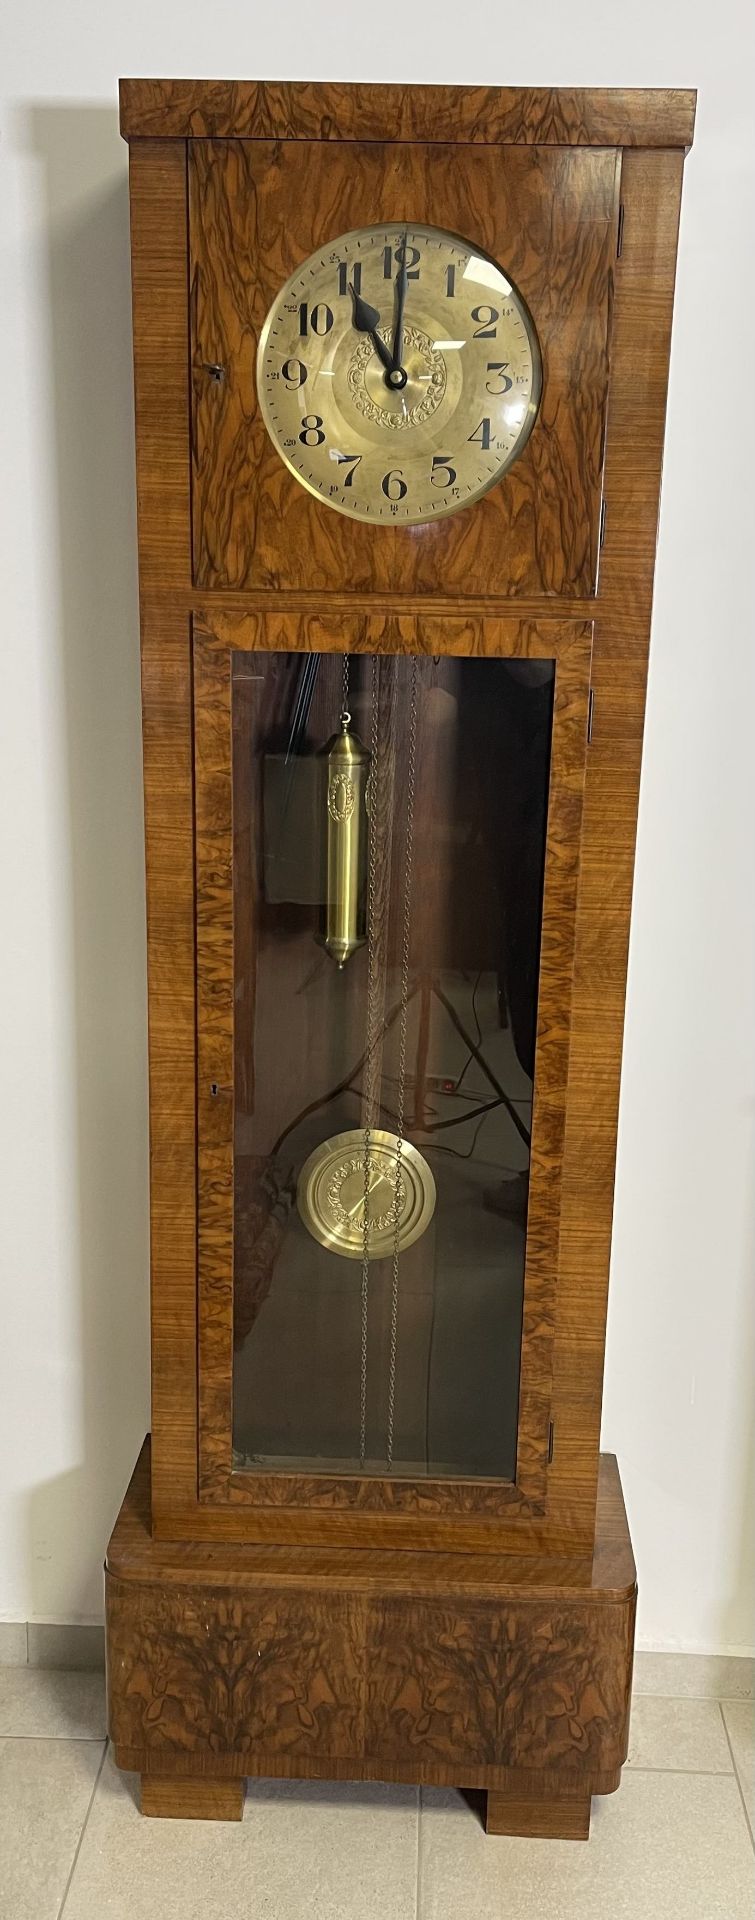 Simple art deco grandfather clock, beginning of 20th century.